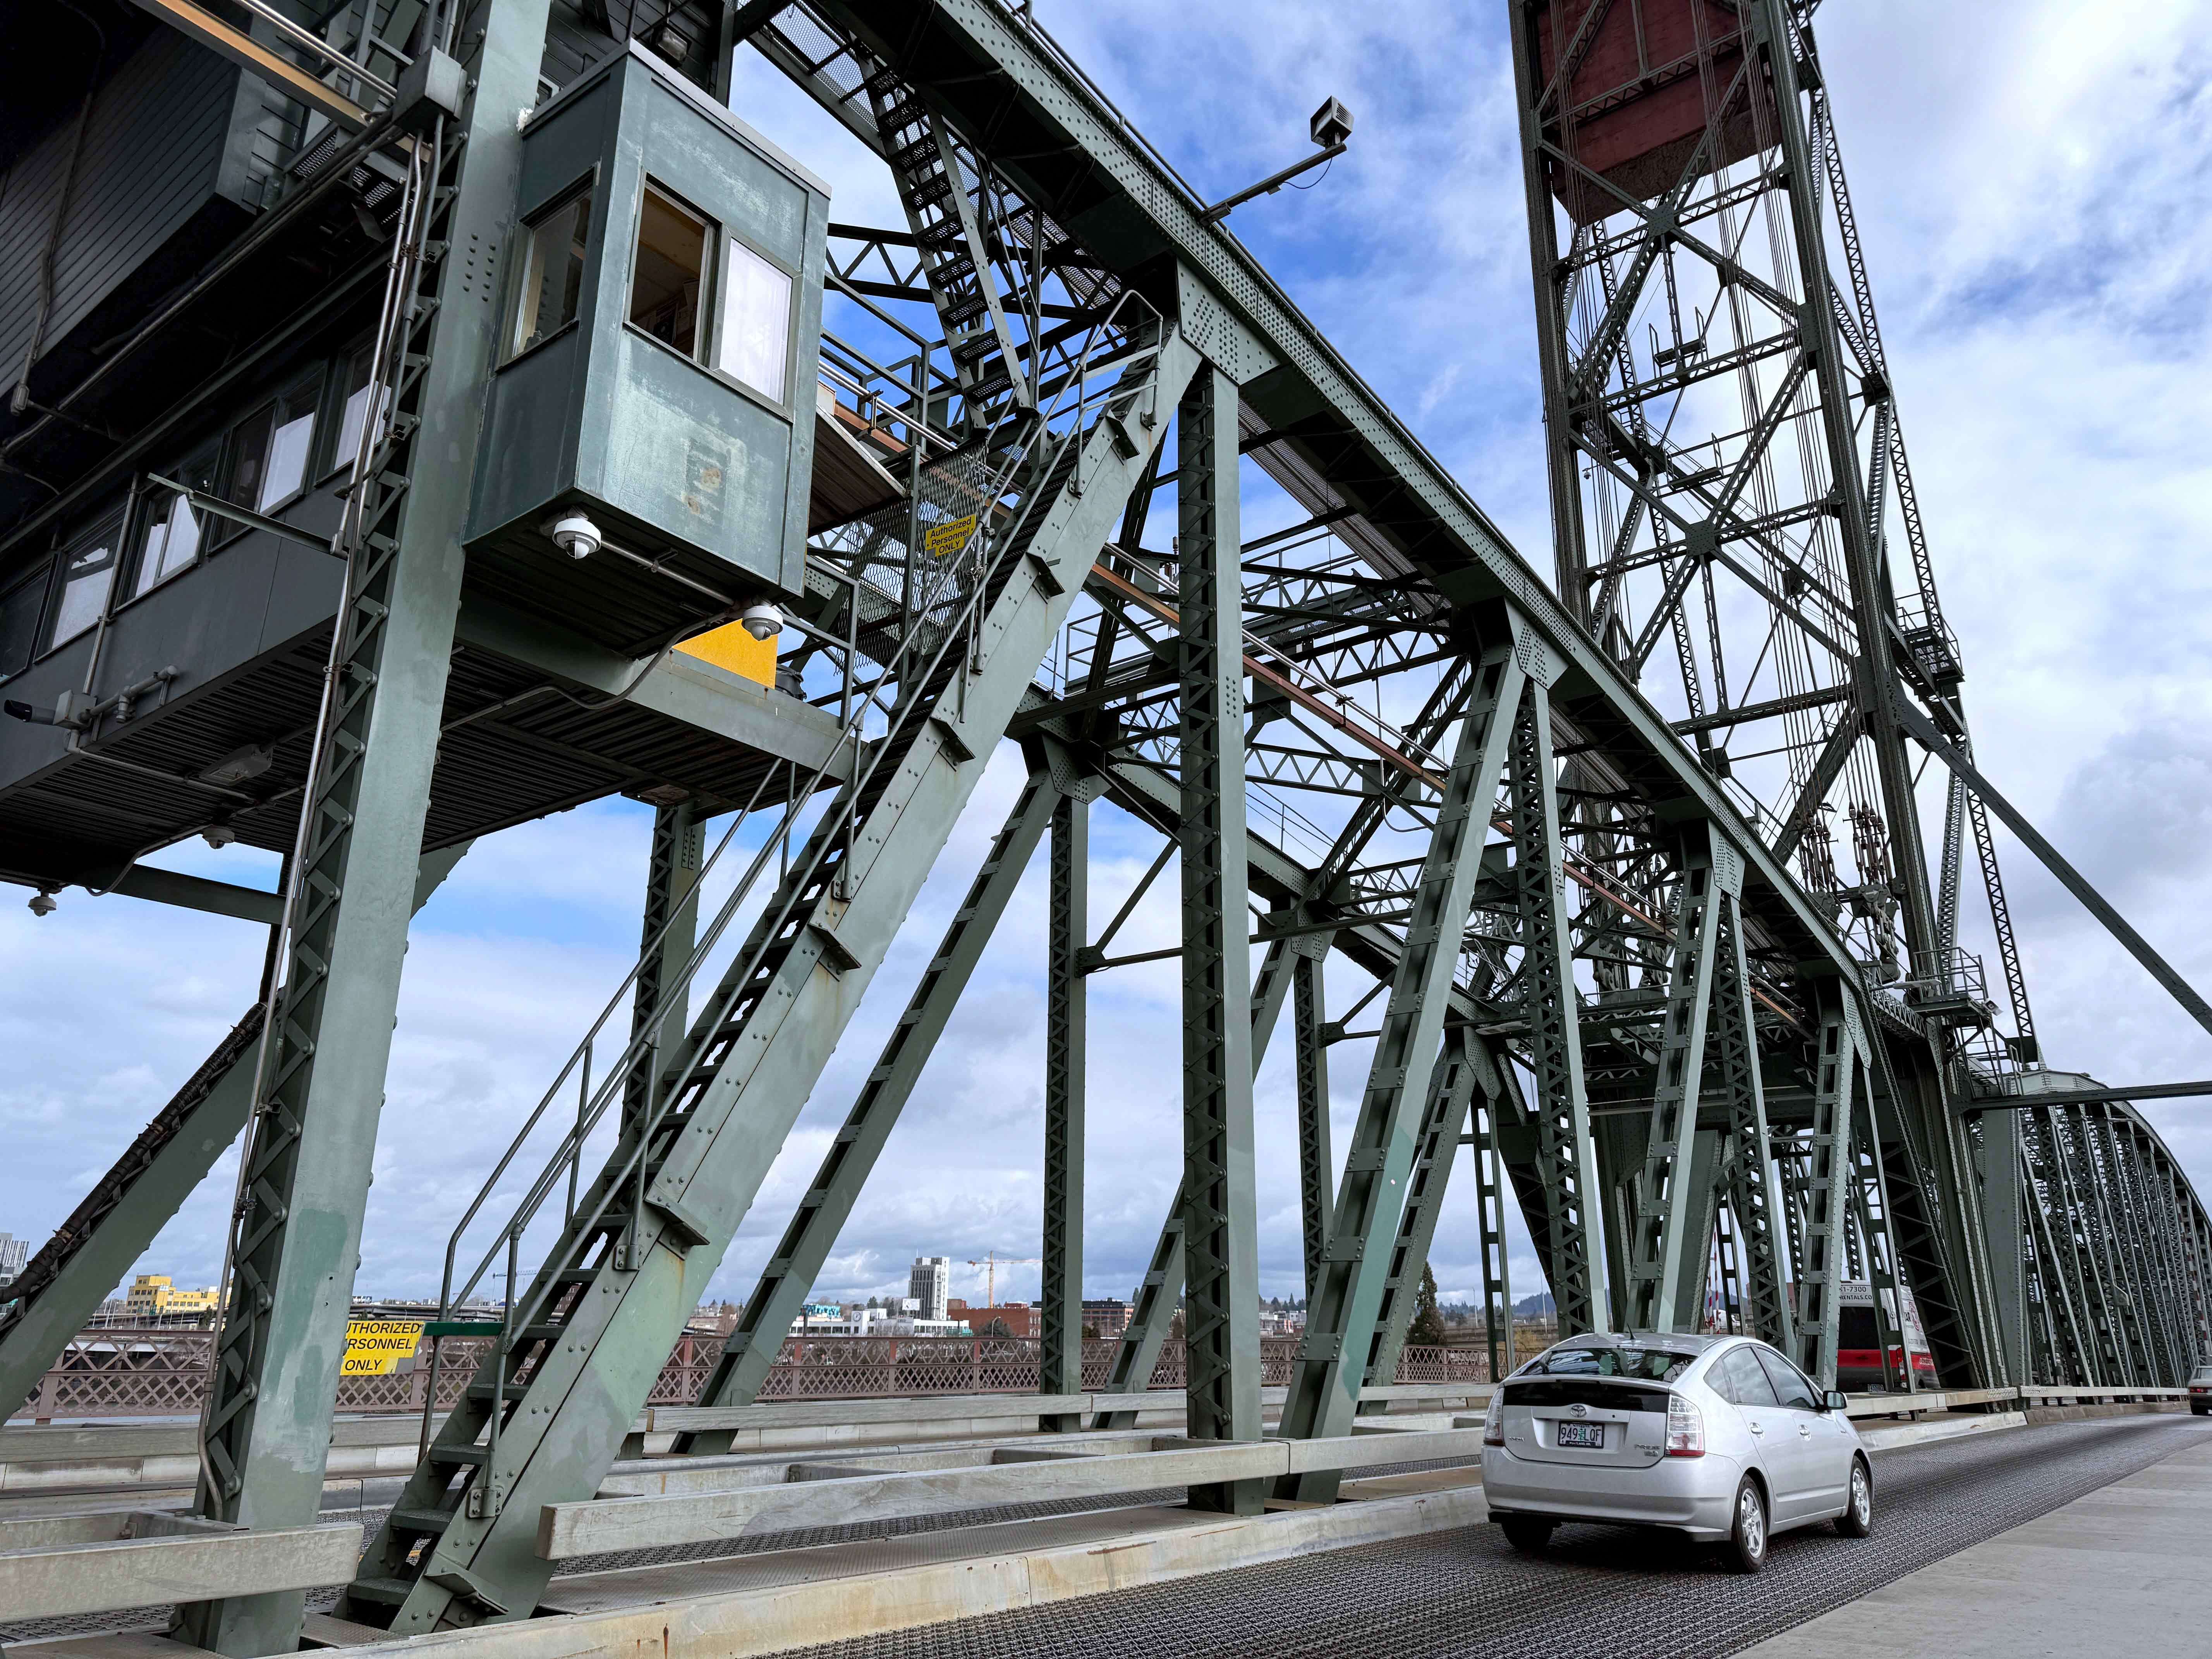 8-hour shifts, 8-minute bridge lifts: At work with Portland bridge